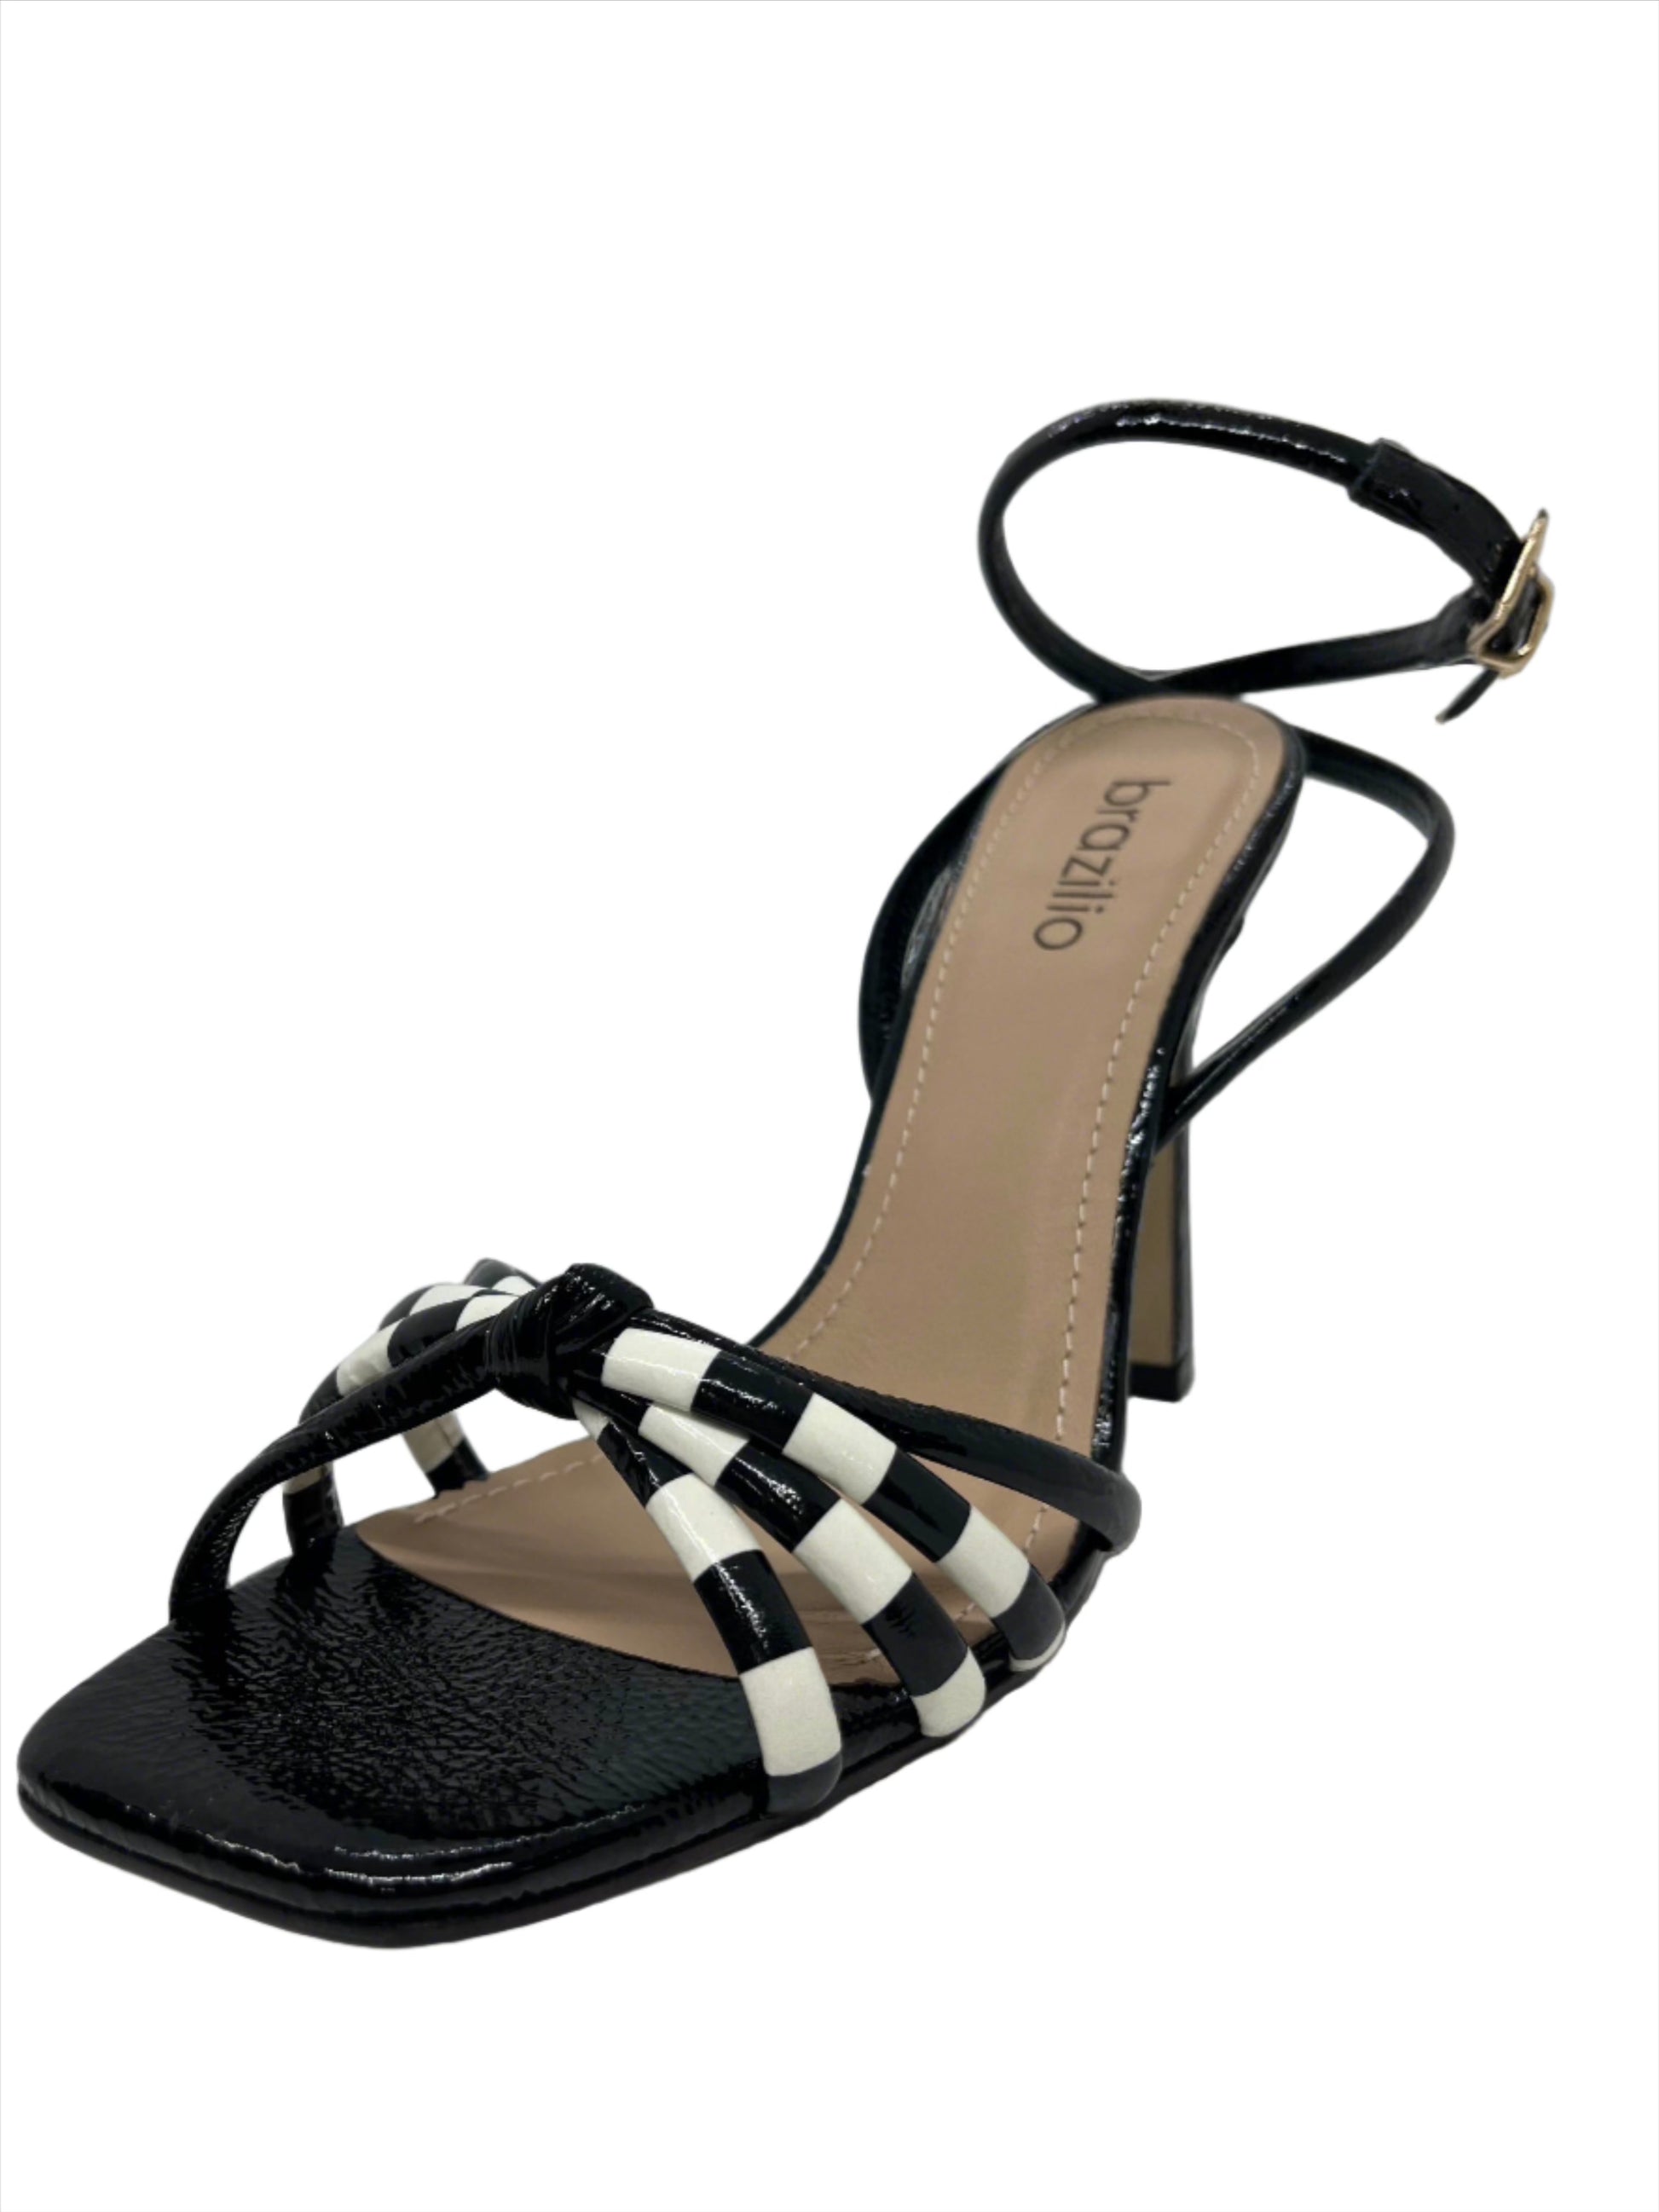 KIA STRAPPY HEEL - BRAZILIO - 5430012, womens footwear - Stomp Shoes Darwin